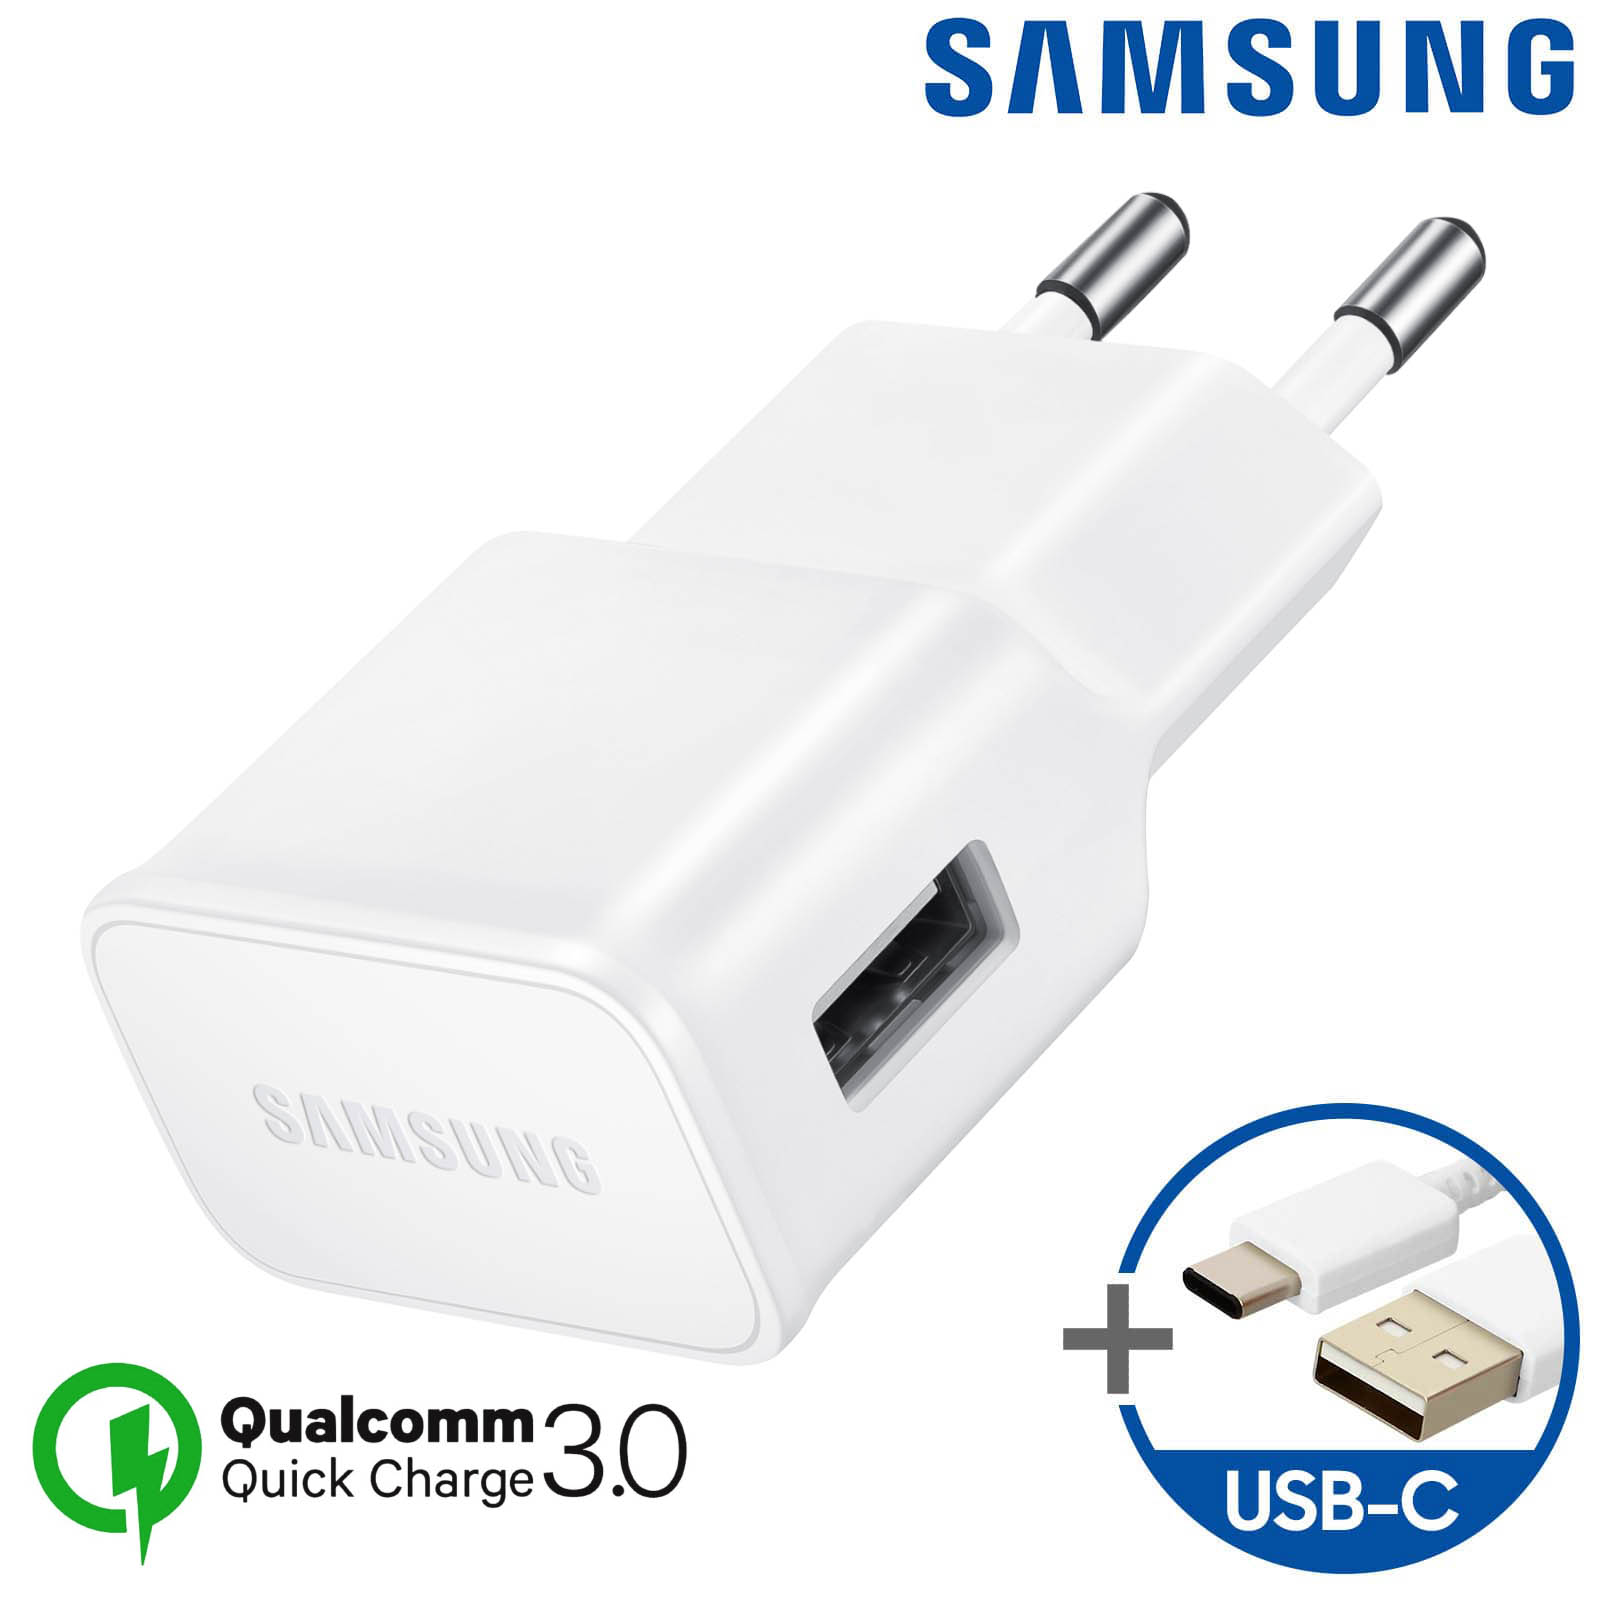 Chargeur Original Samsung Quick Charge 3.0 USB + Câble USB-C